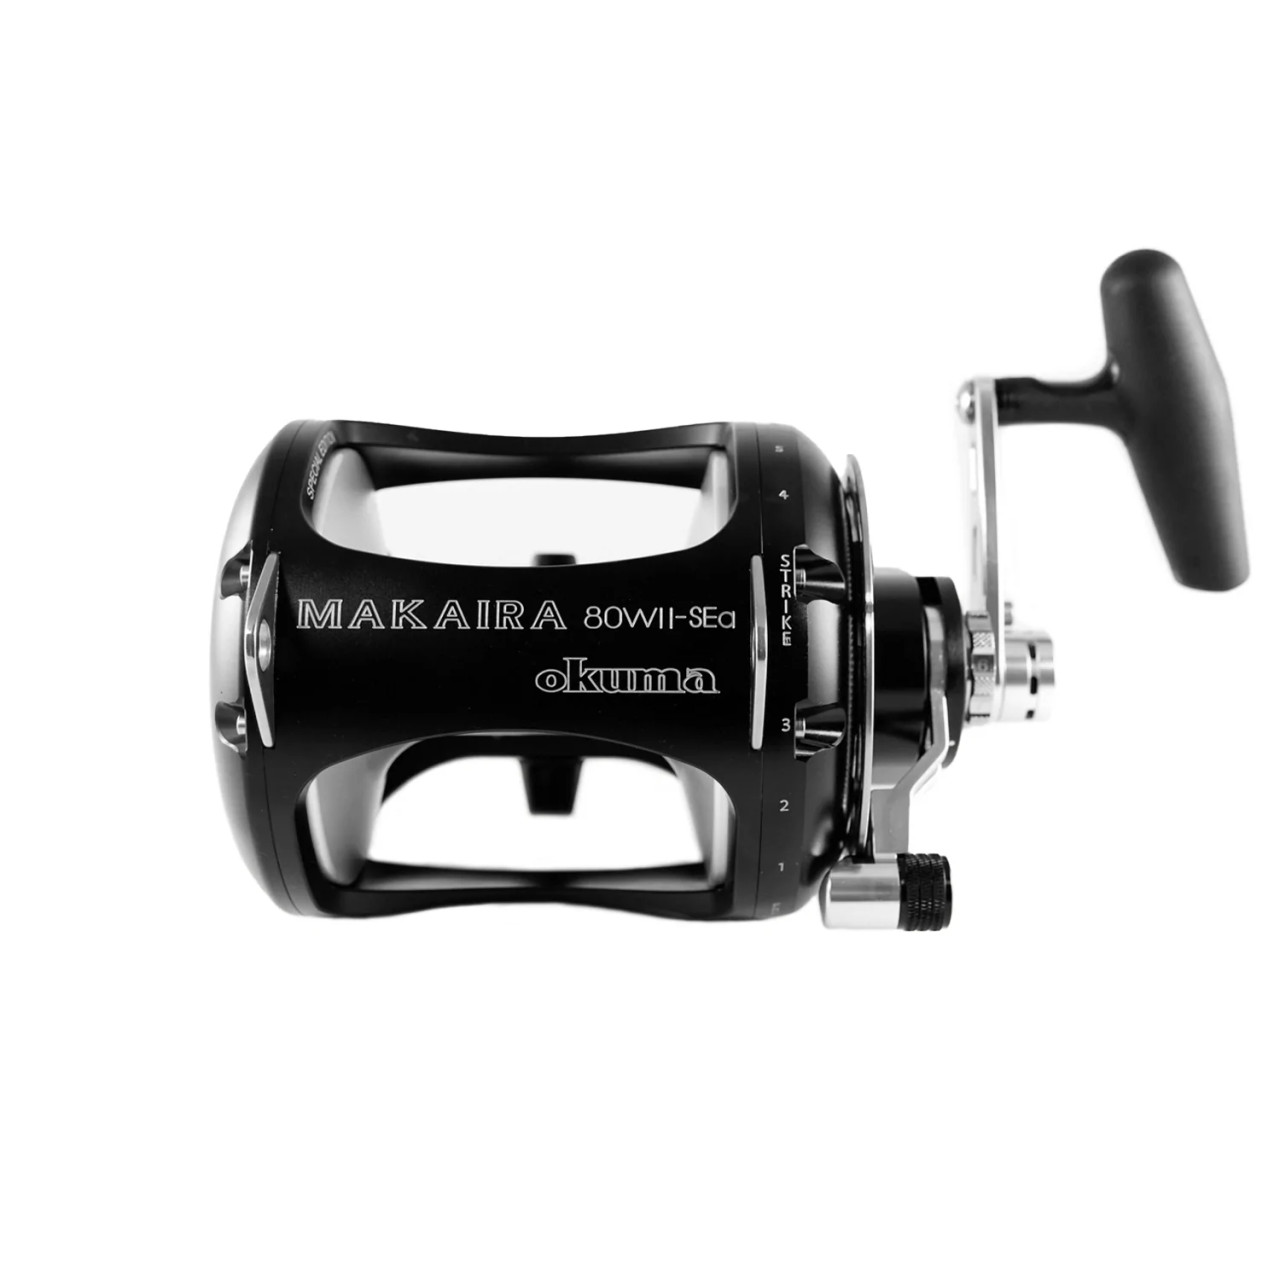 Okuma Makaira Sea Black Fishing Reels | MK-15TIISEa-MTBLK